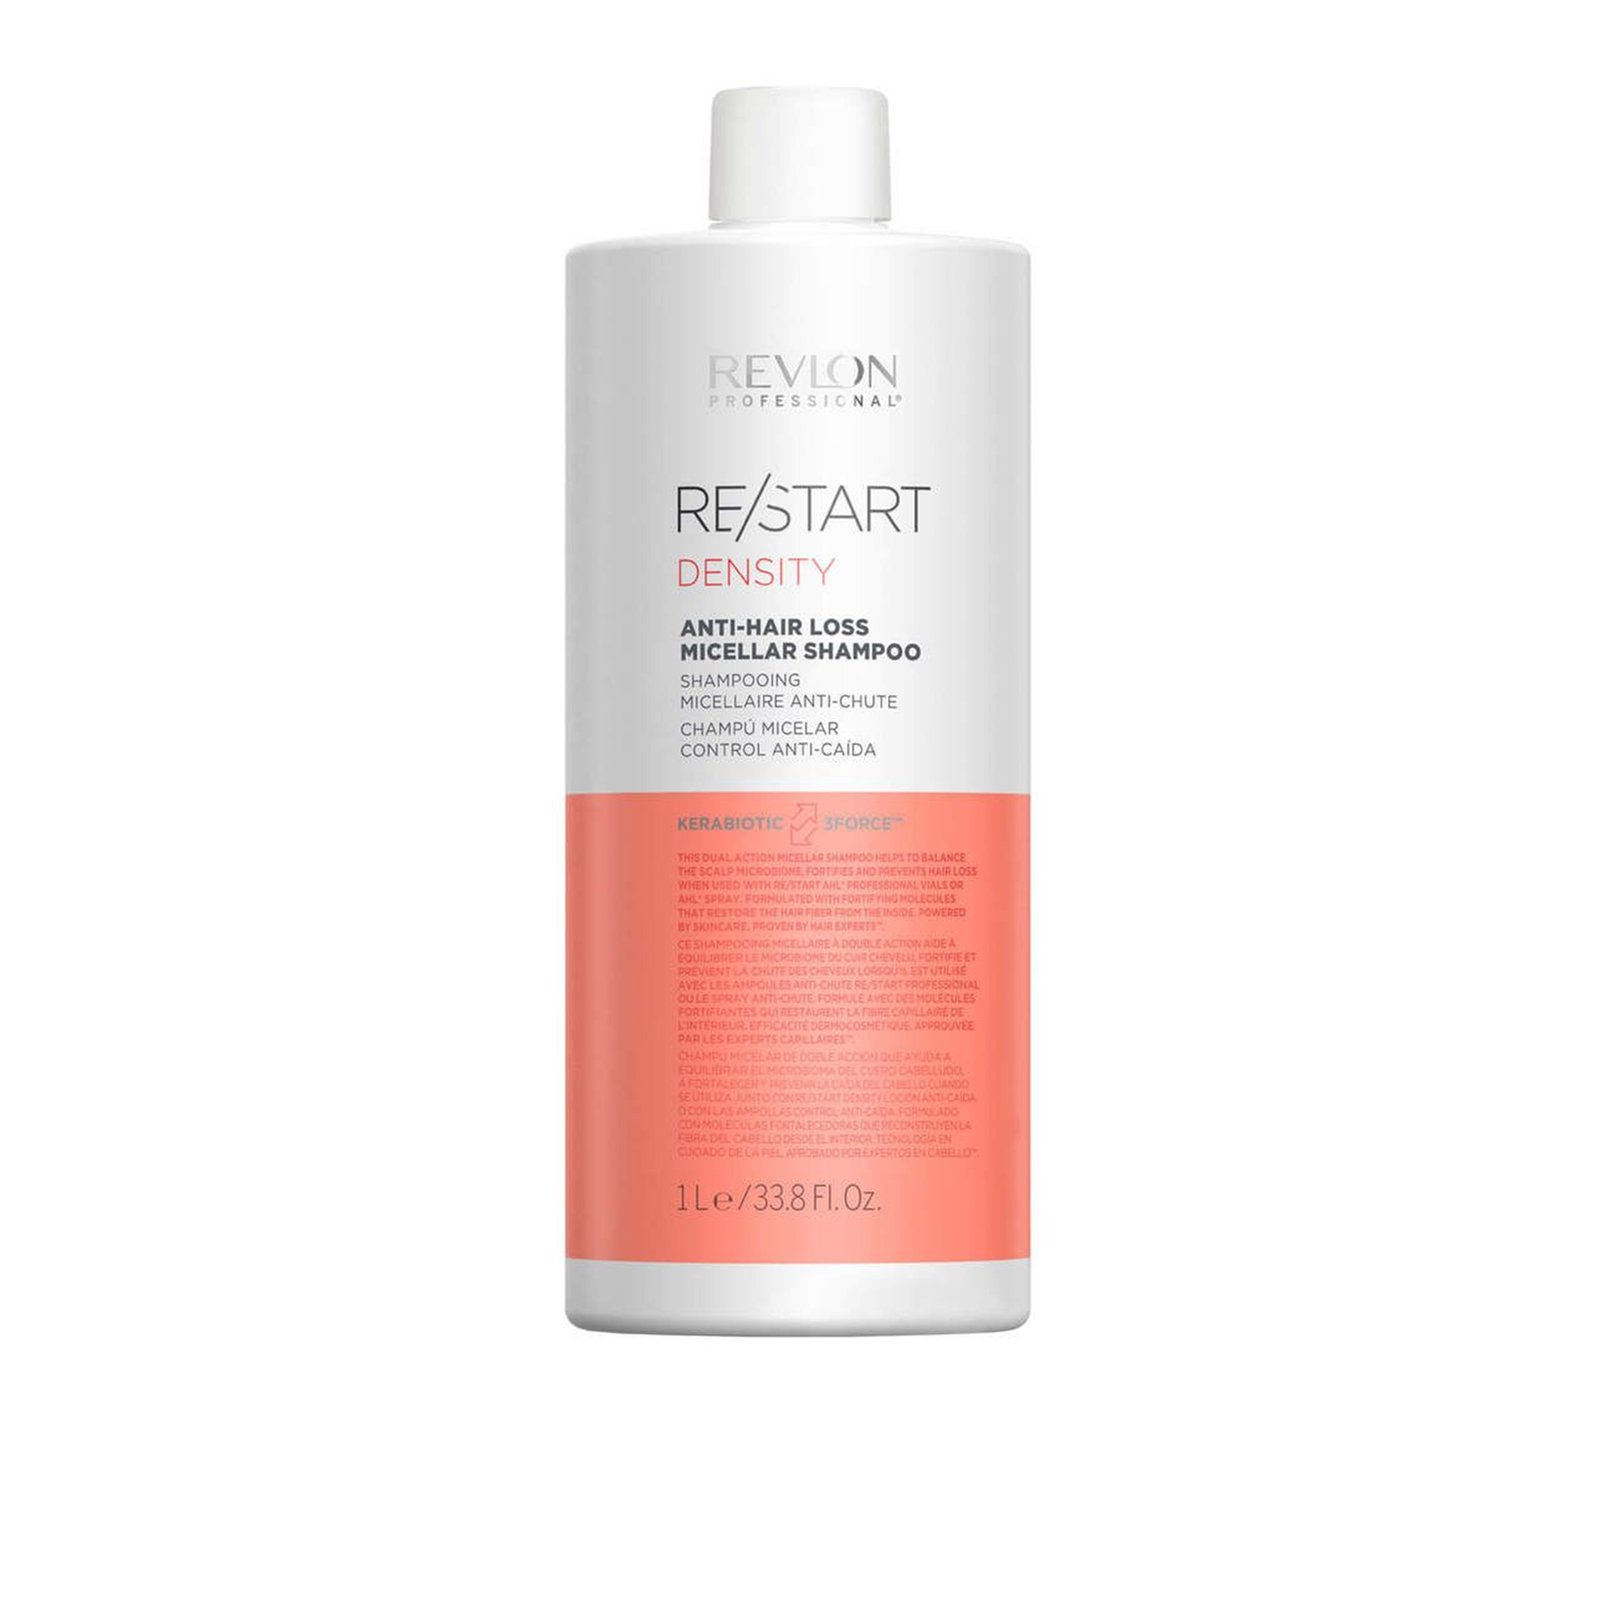 Revlon Professional Re/Start Density Anti-Hair Loss Micellar Shampoo 1L